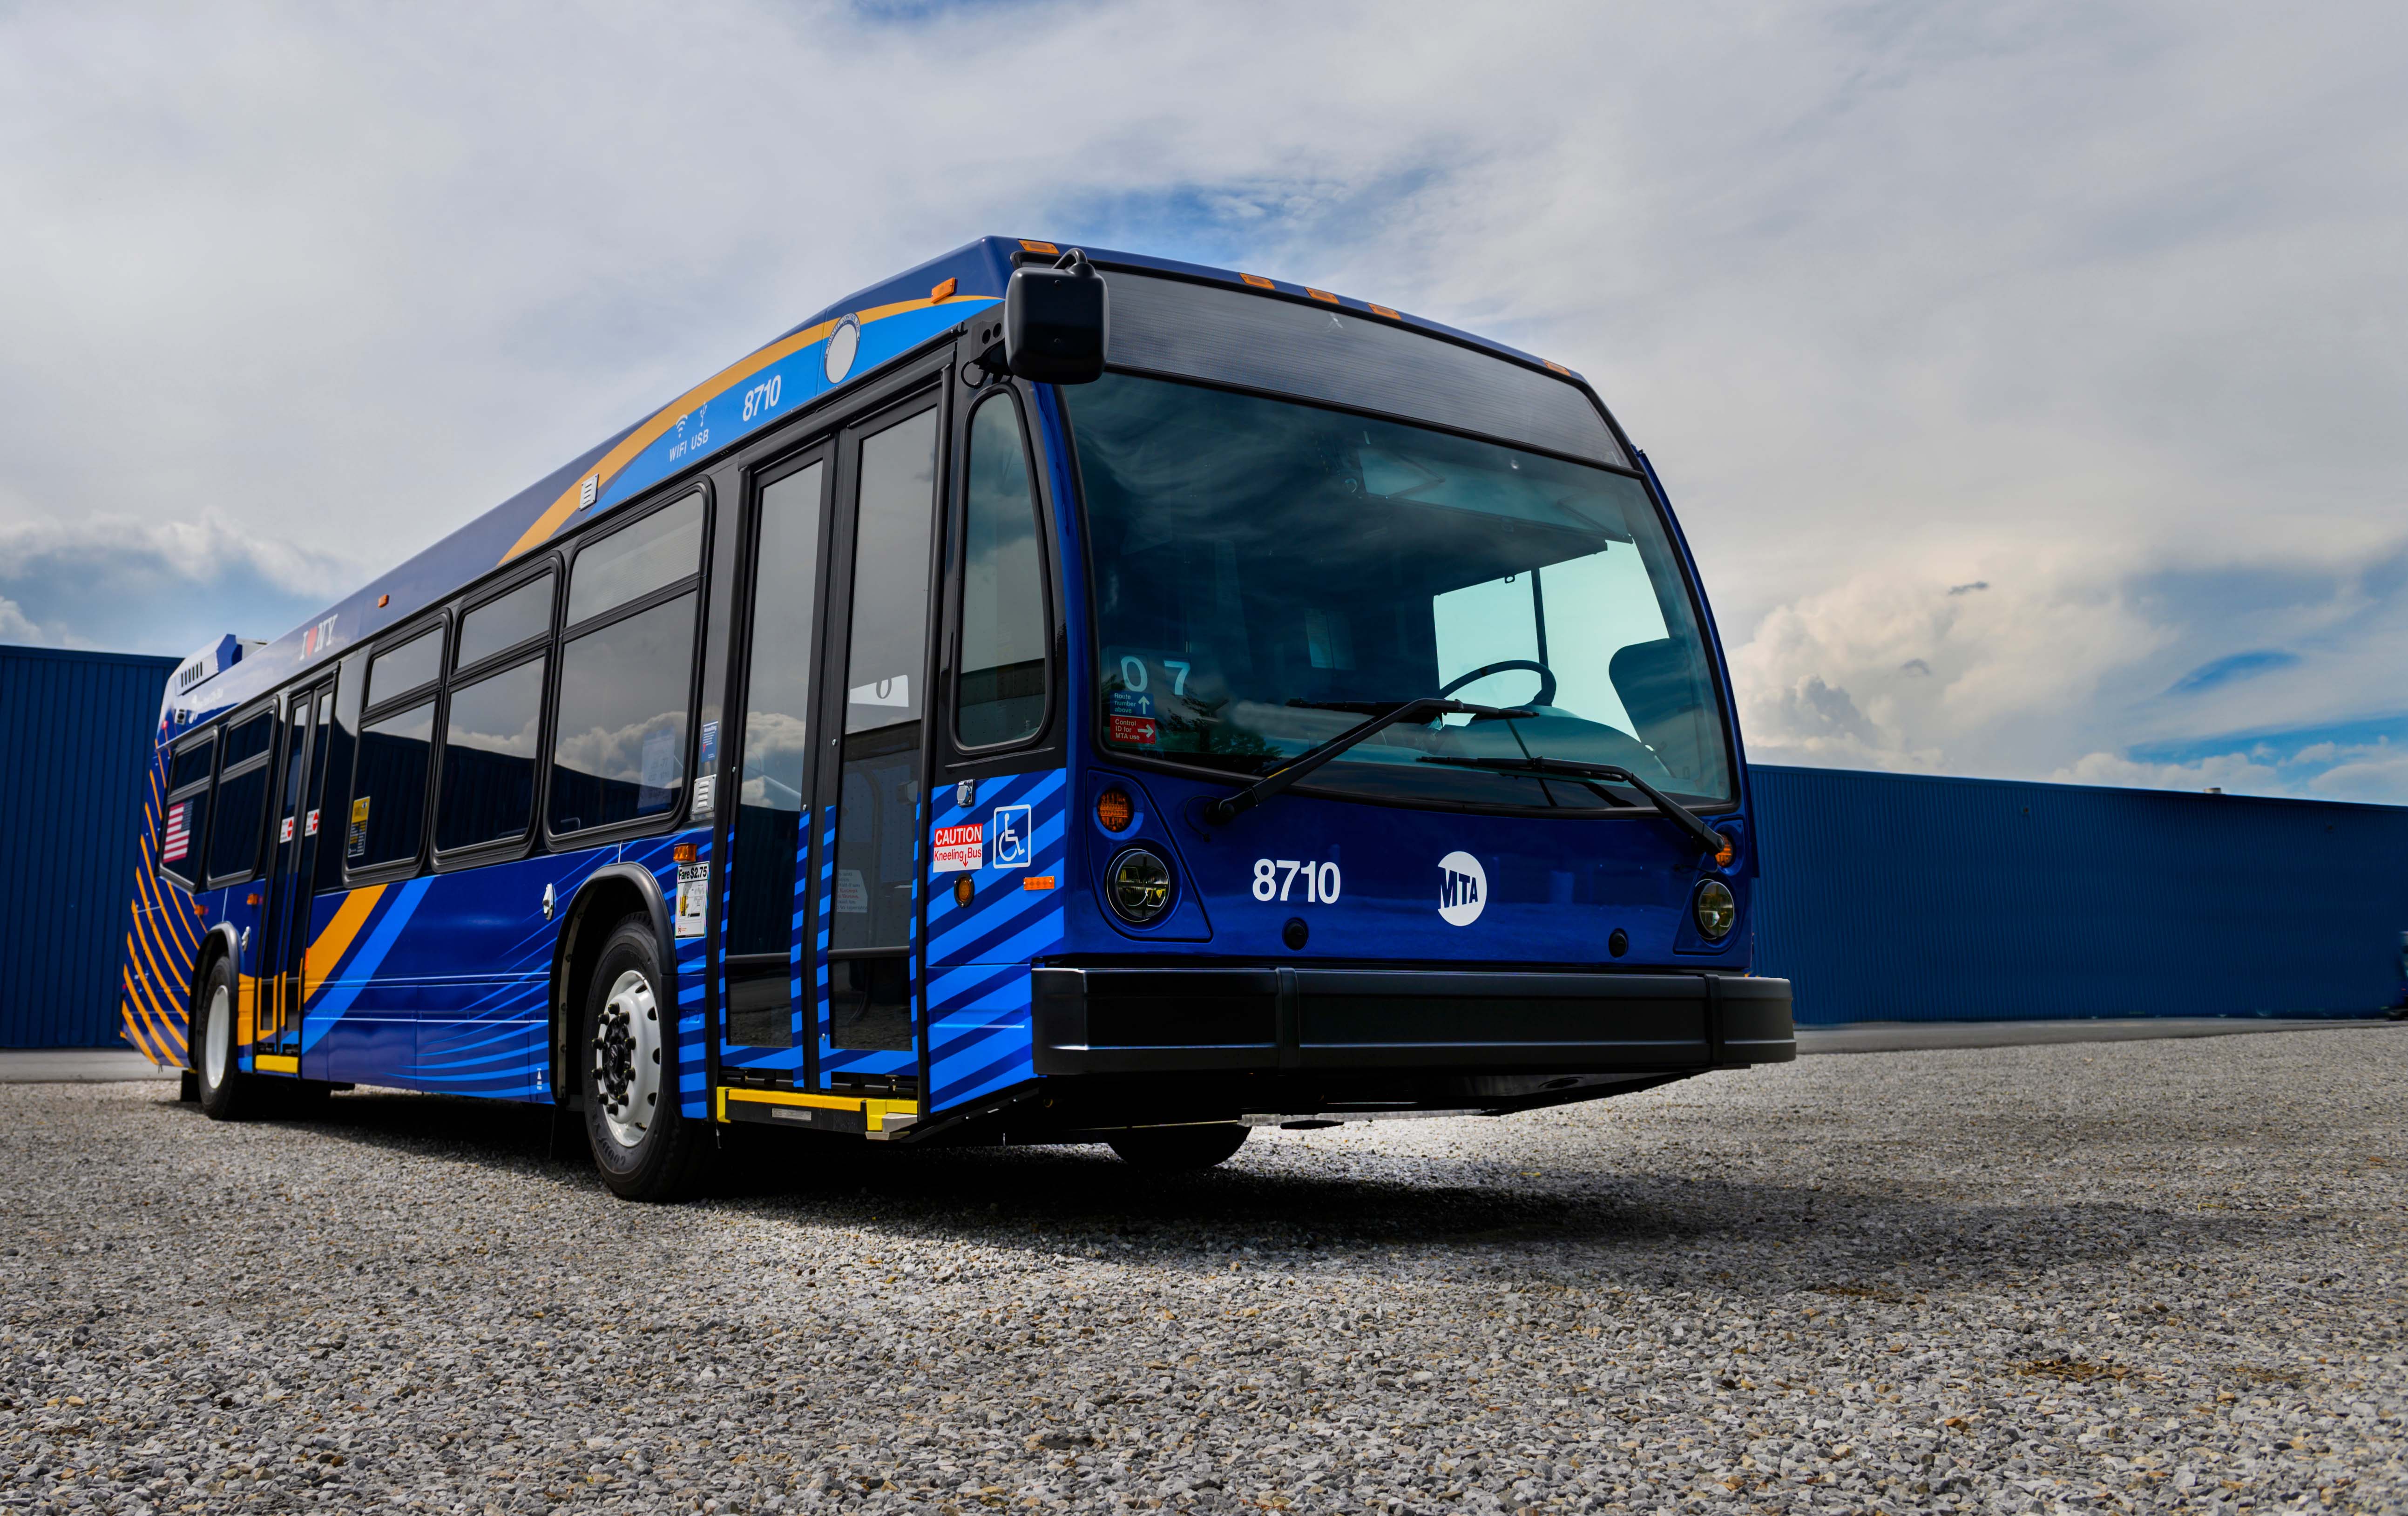 Nova Bus wins an important bid from the York Metropolitan Transportation Authority (MTA)